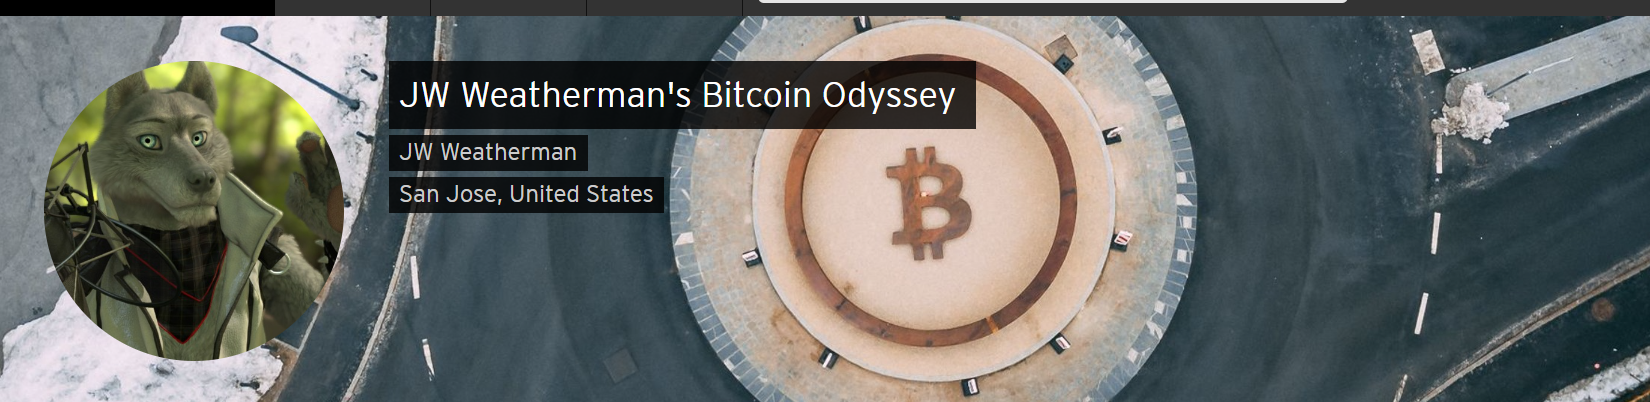 Bitcoin Odyssey